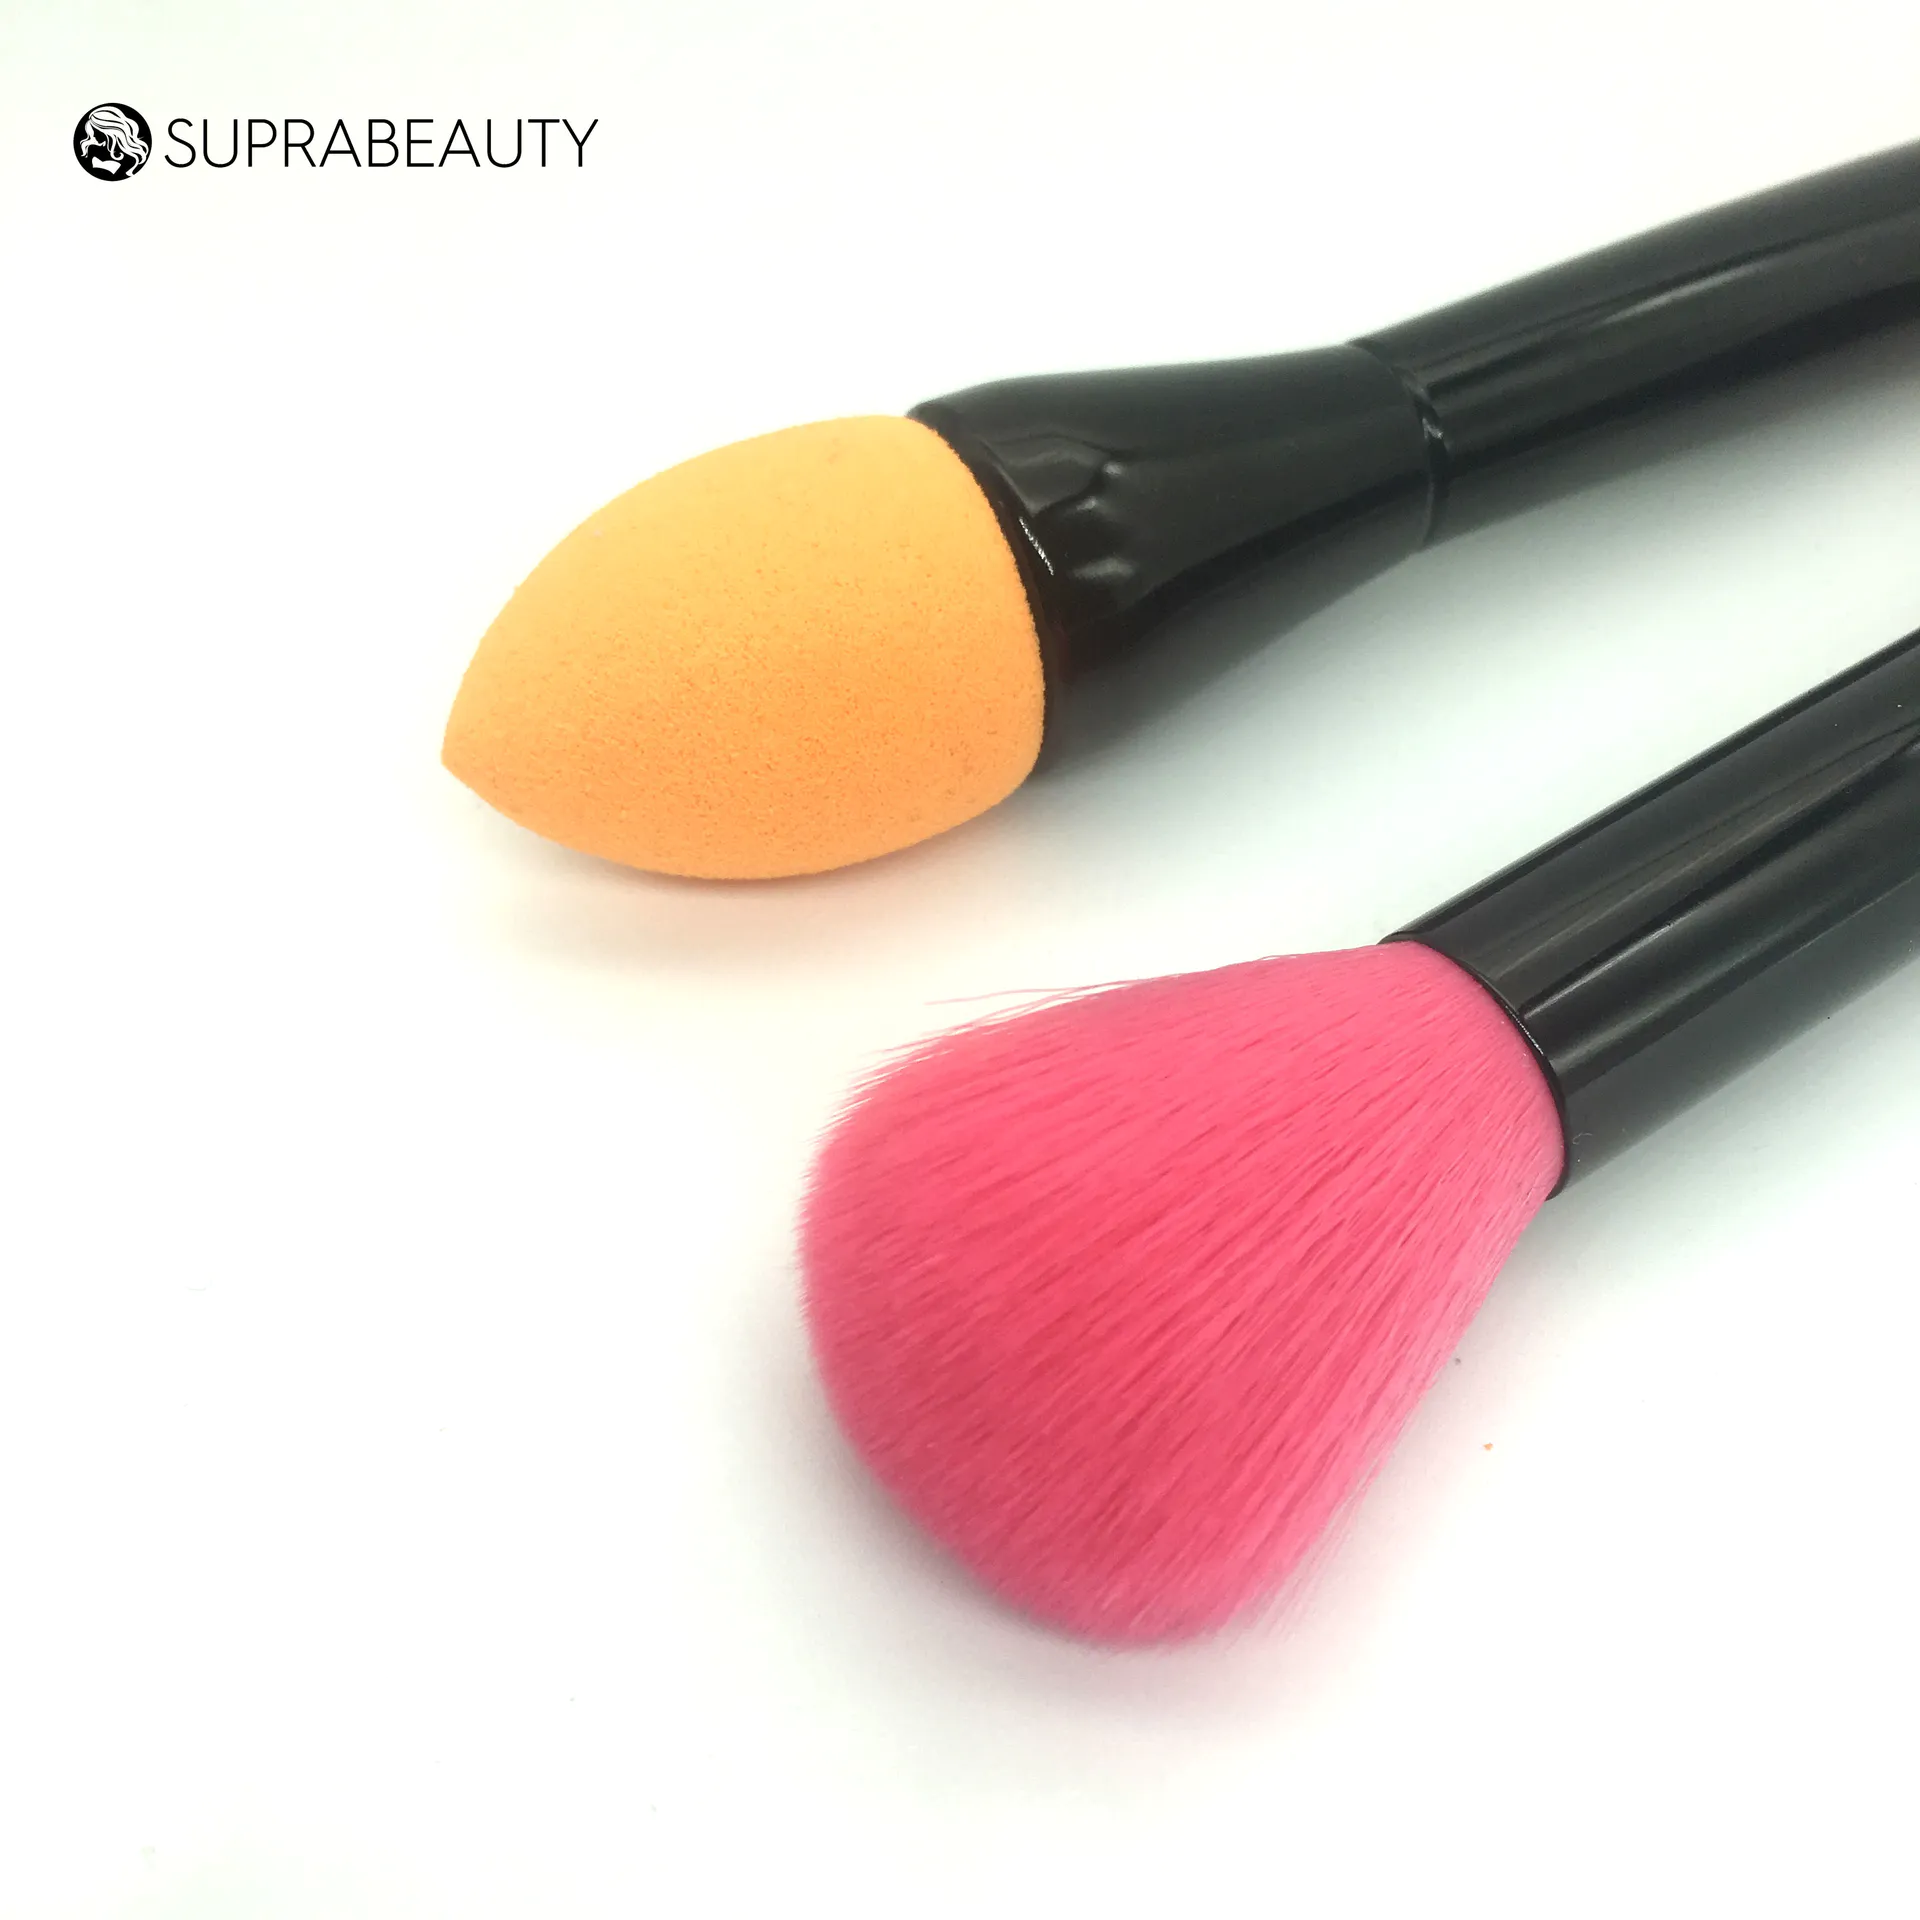 Rose gold makeup brushes wholesale private label anime makeup brushes custom logo sponge makeup brush